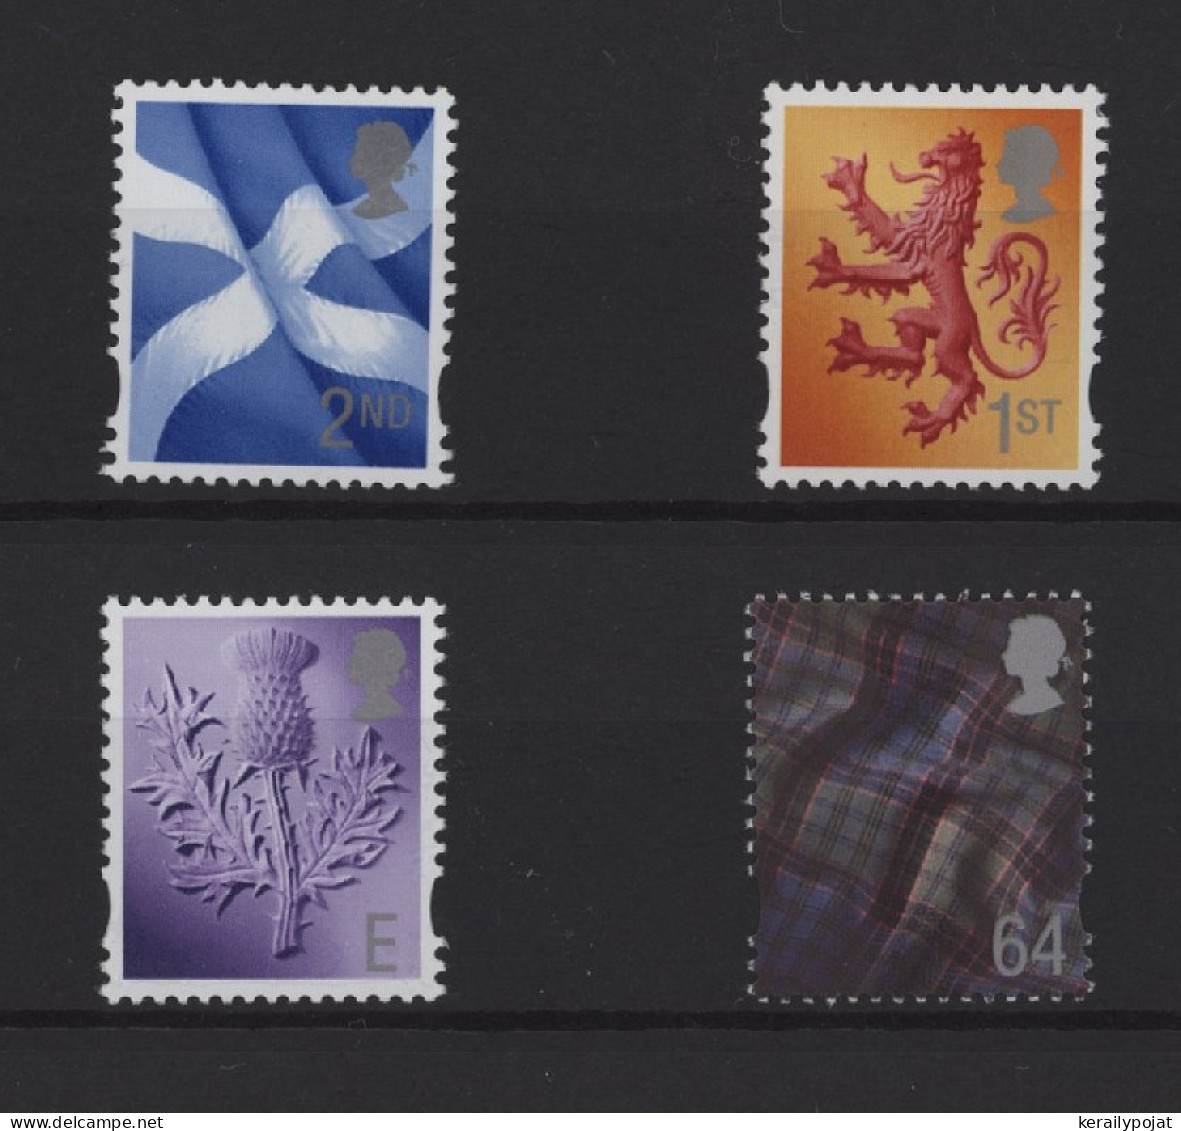 Scotland - 2003 National Symbols MNH__(TH-25852) - Escocia